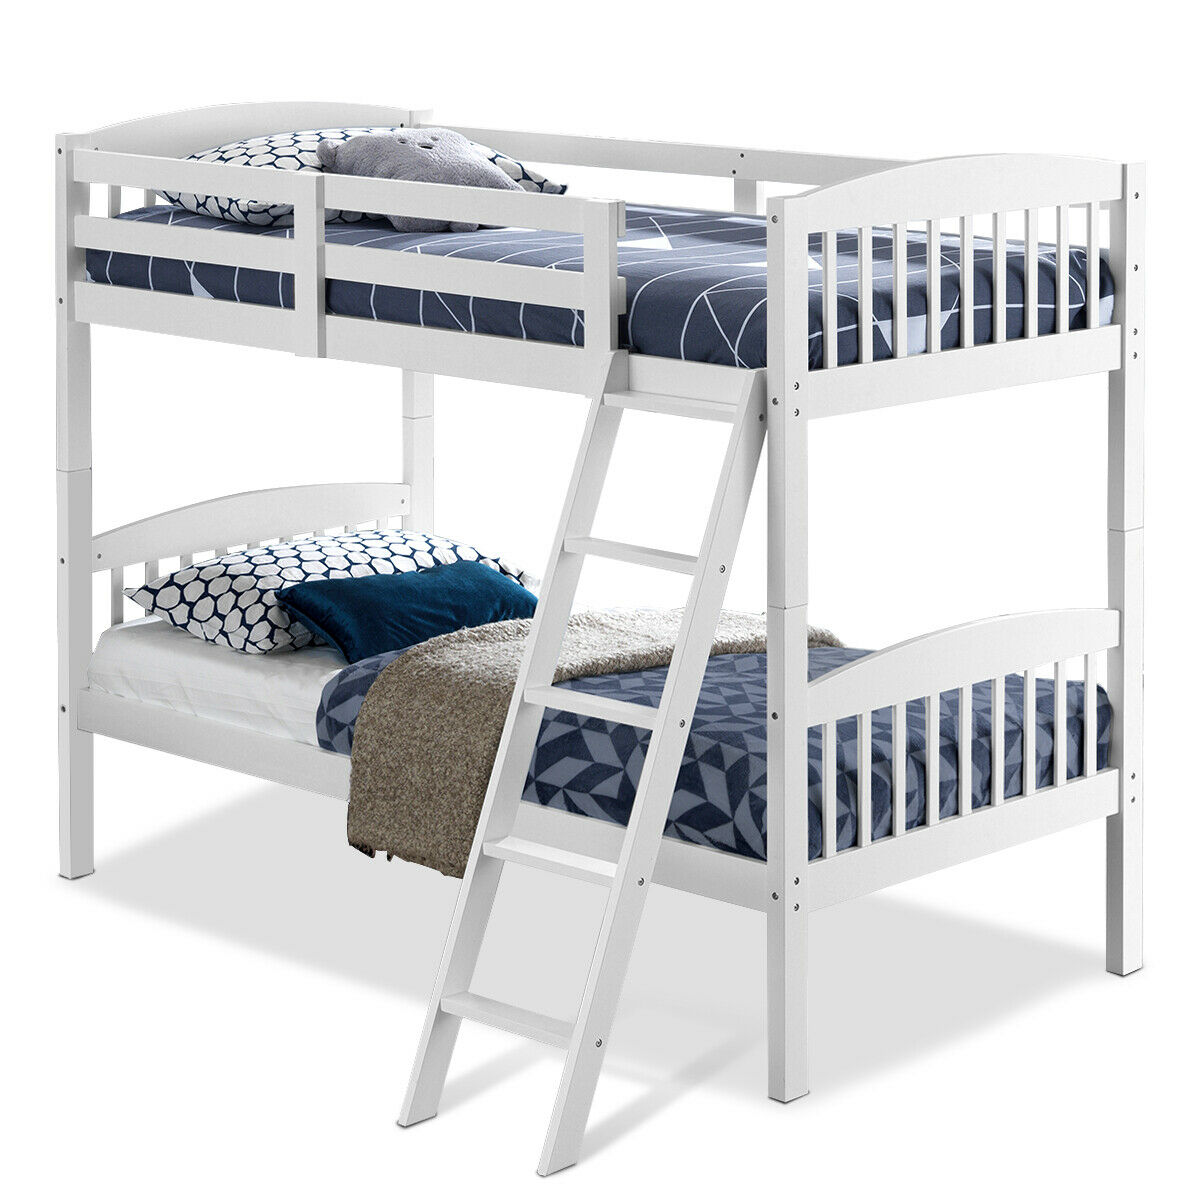 Costway Wood Hardwood Twin Bunk Beds, Toddler Proof Bunk Bed Ladder